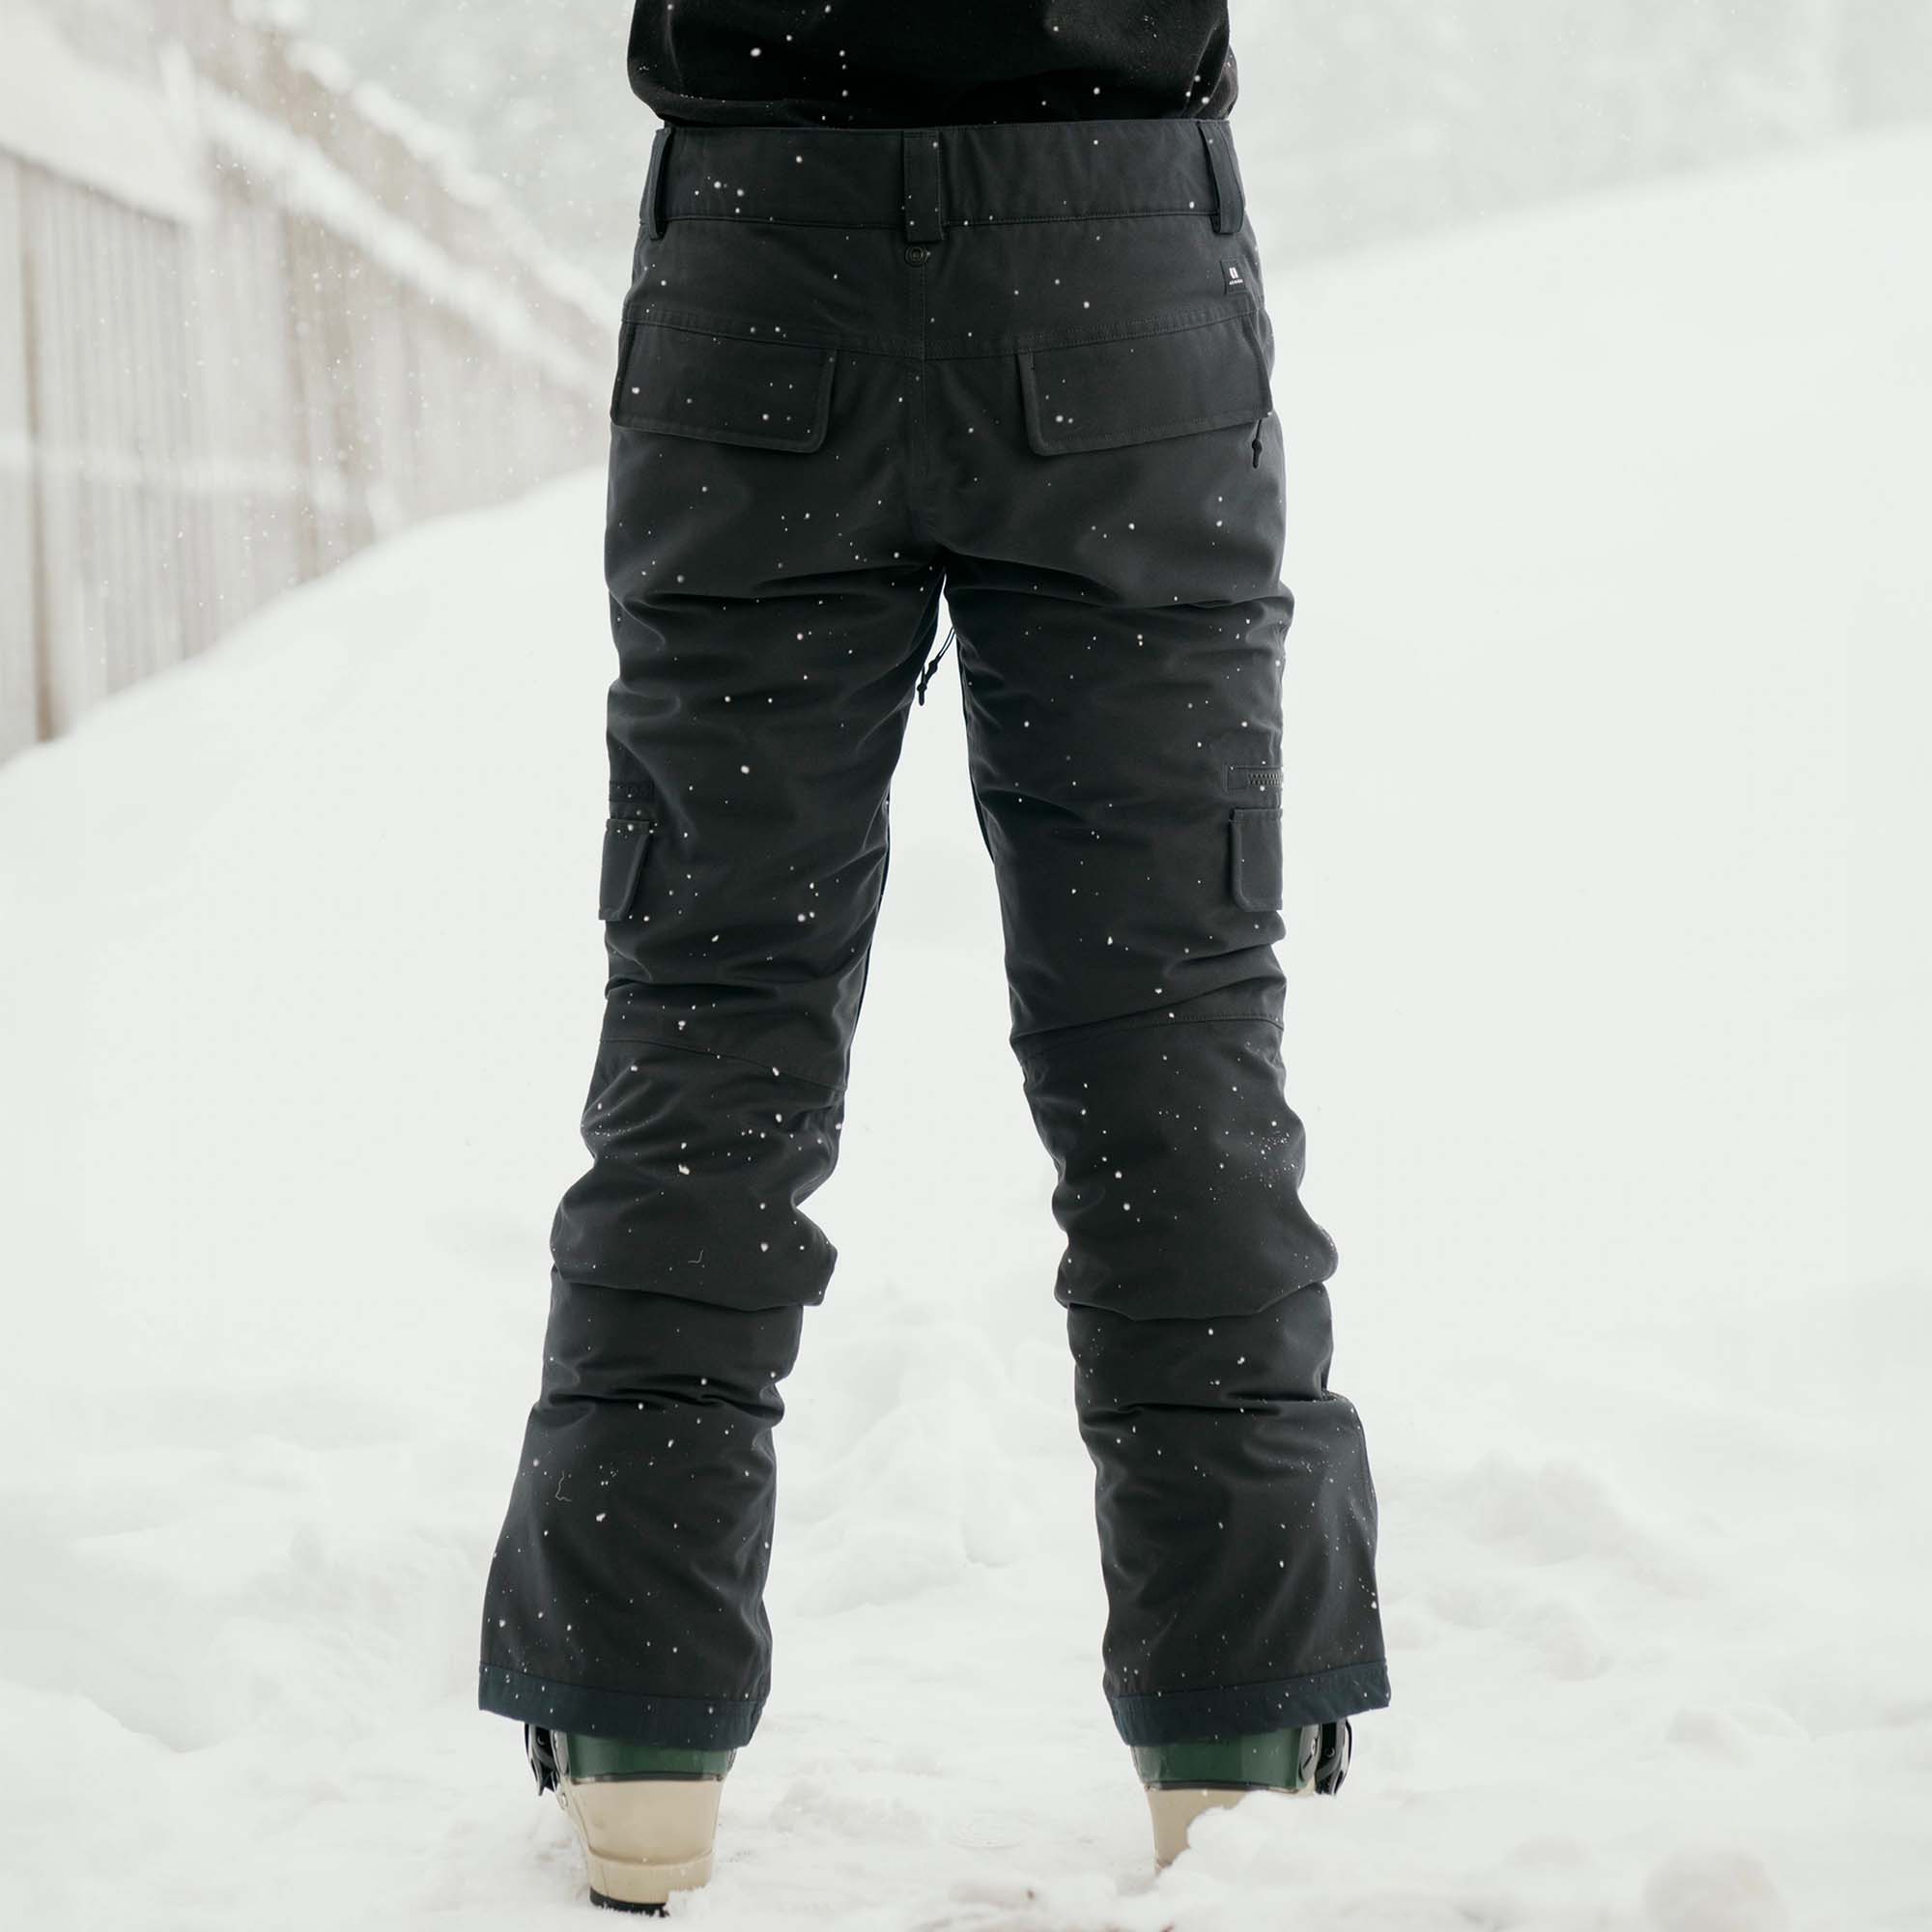 Armada Mula 2L Women's Ski/Snowboard Pants